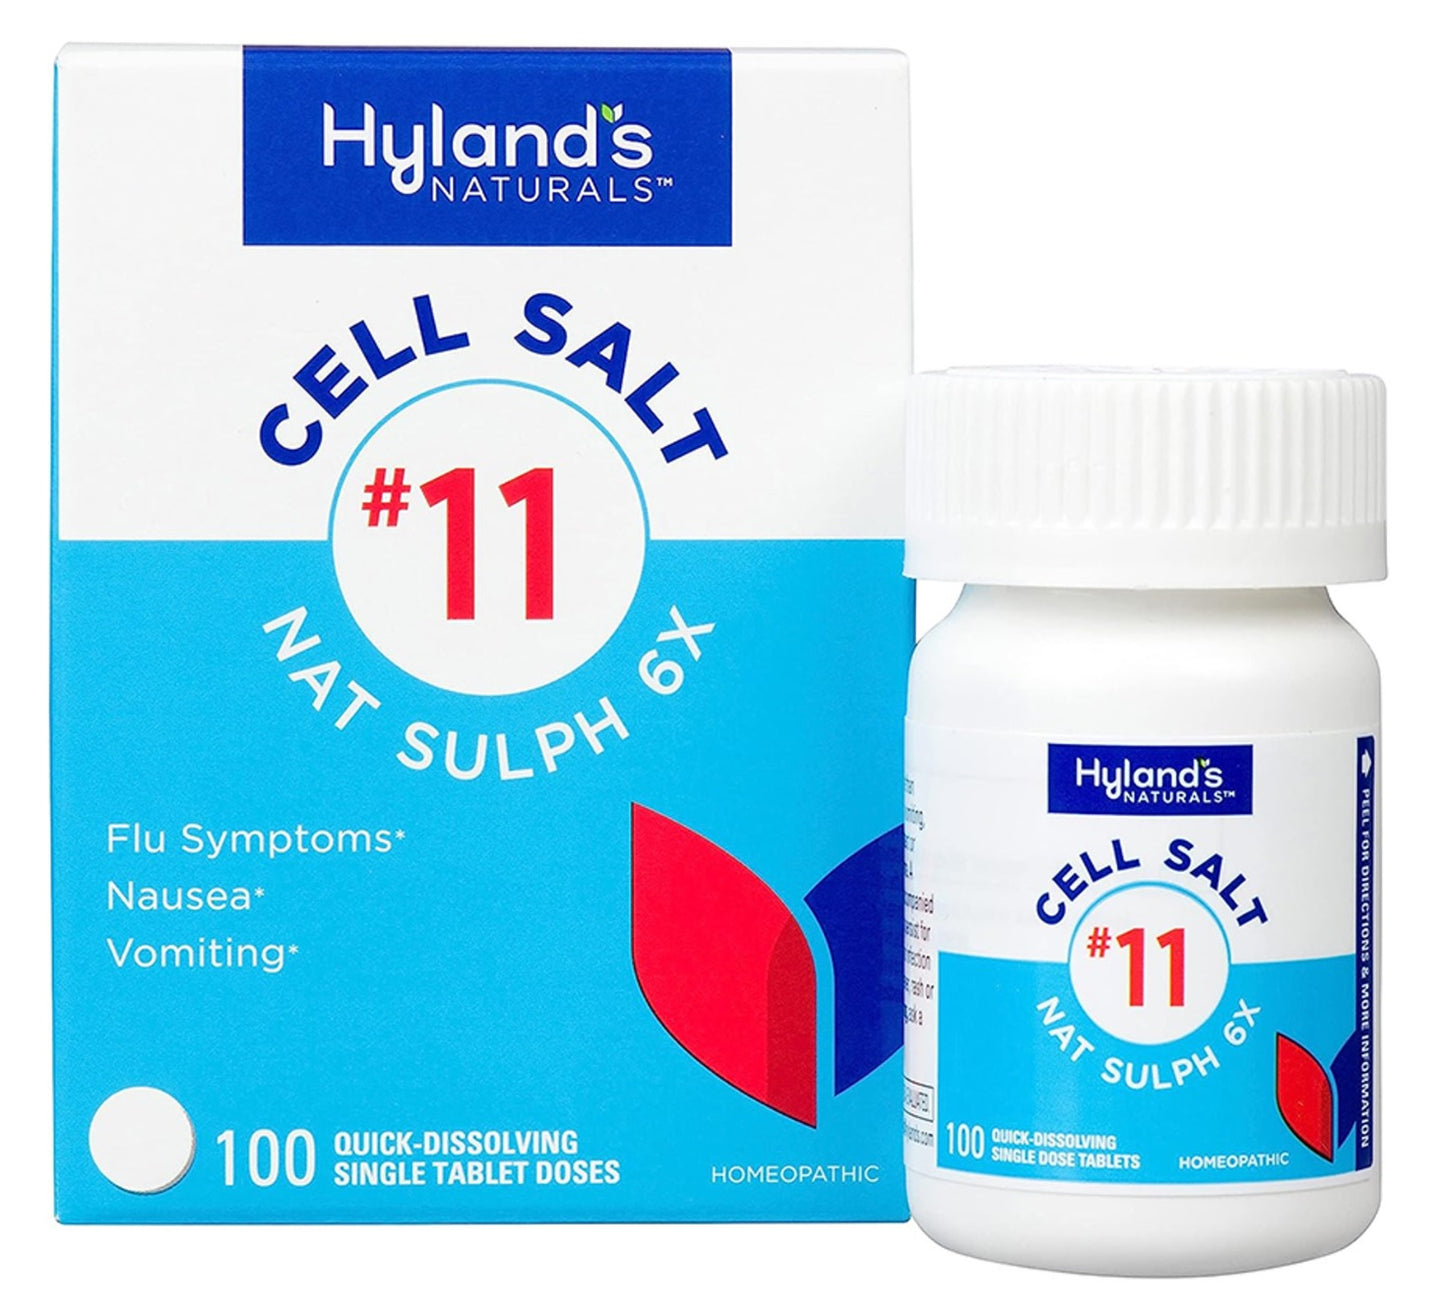 Hyland's Nat Sulph 6x #11 Cell Salt, 100 Tablets